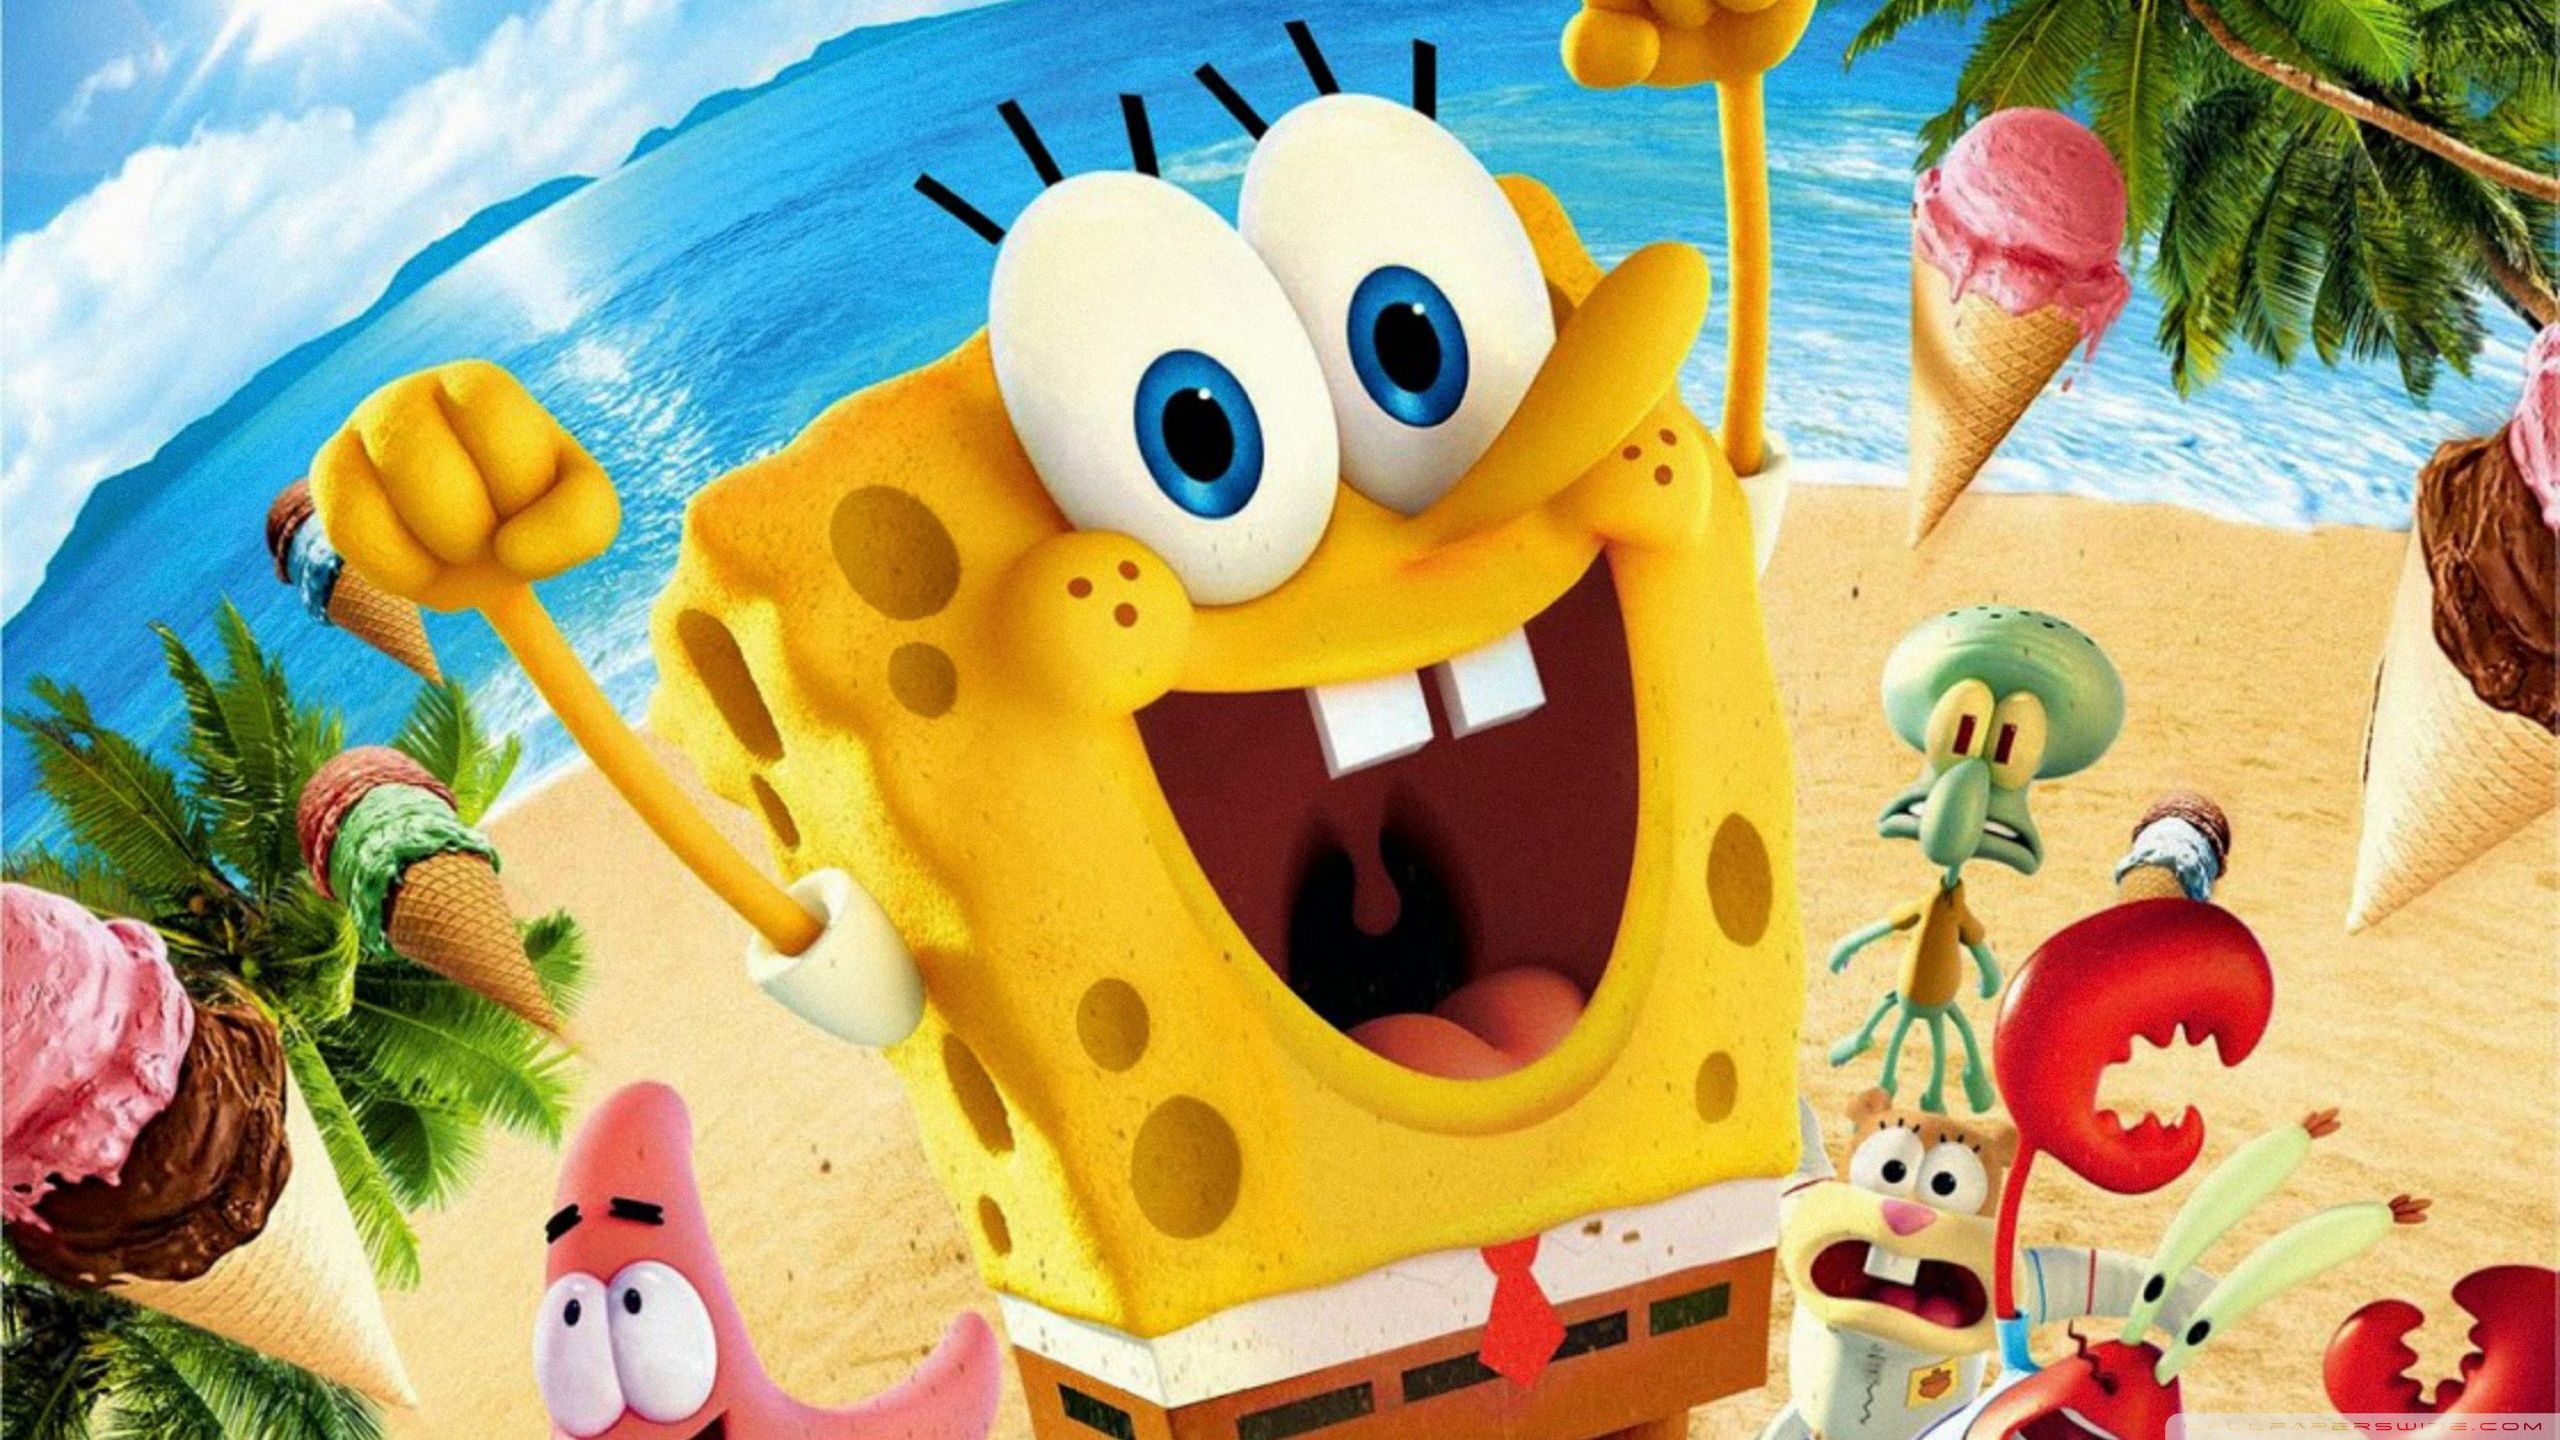 Free Spongebob Cartoon Movie HD Wallpaper. All Free Picture. Spongebob wallpaper, Cartoon wallpaper, Spongebob